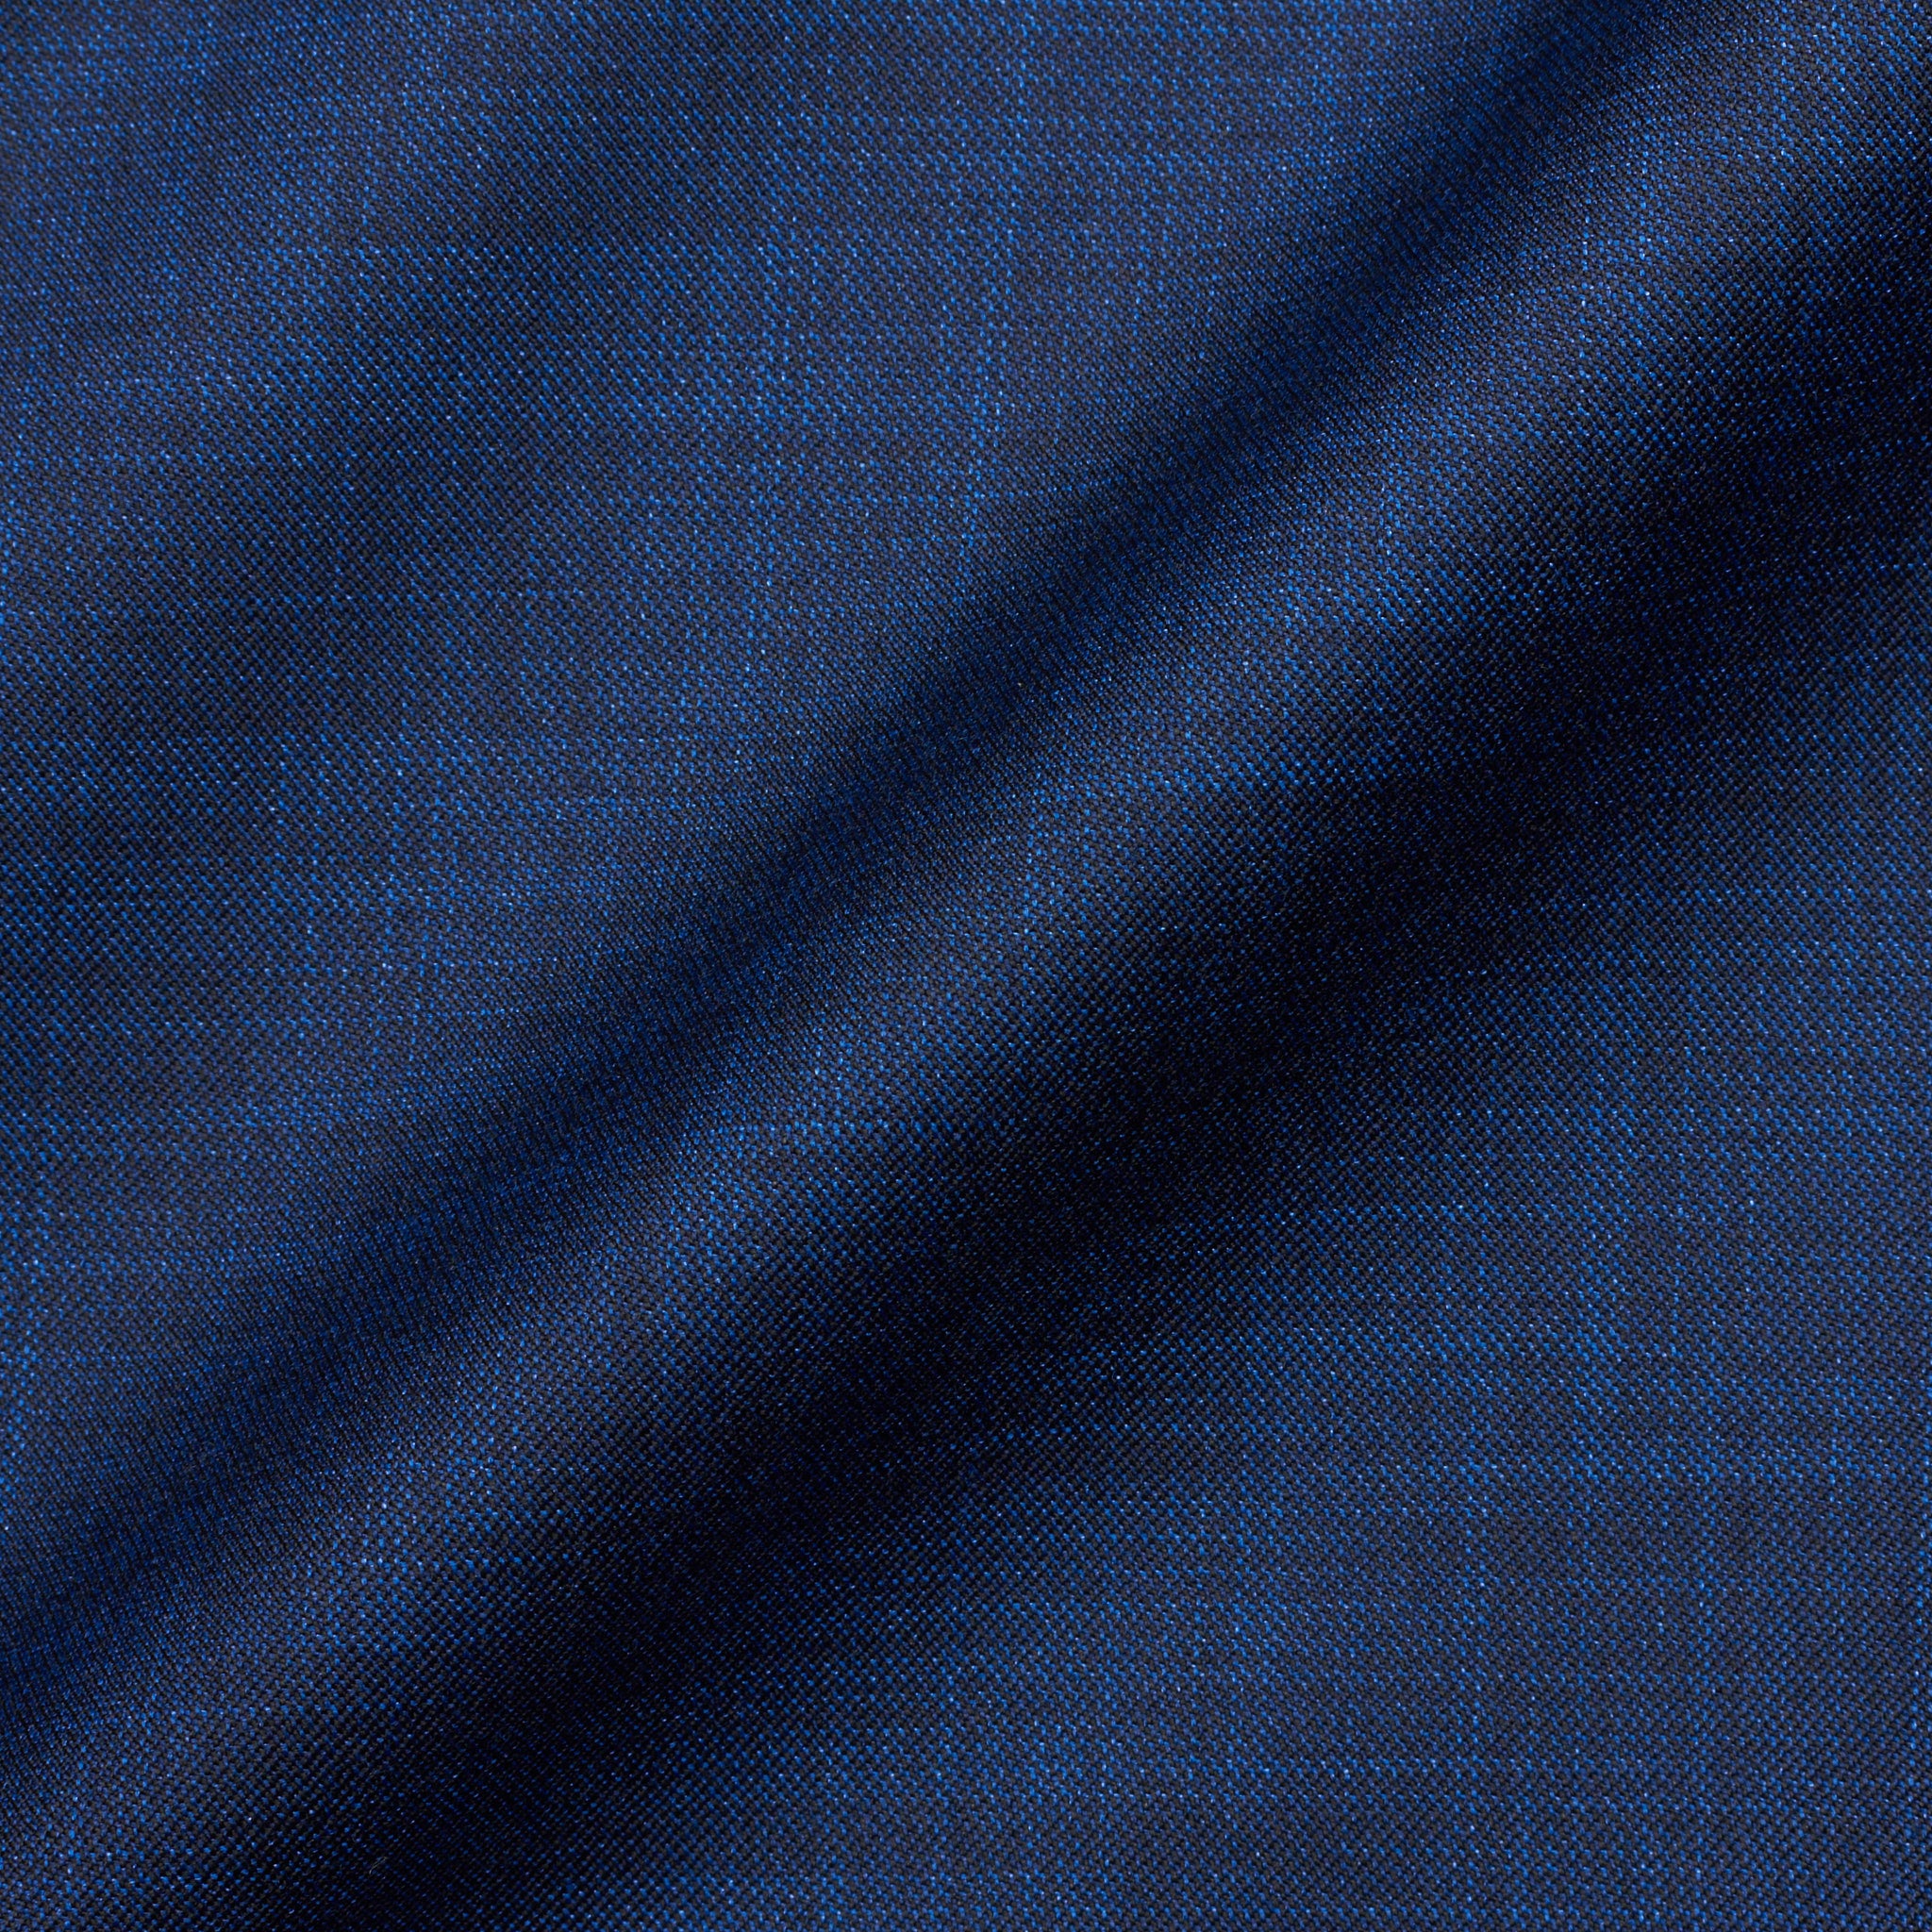 BRIONI "BRUNICO" Handmade Chambray Navy Blue Silk-Wool Super 150's Jacket NEW BRIONI